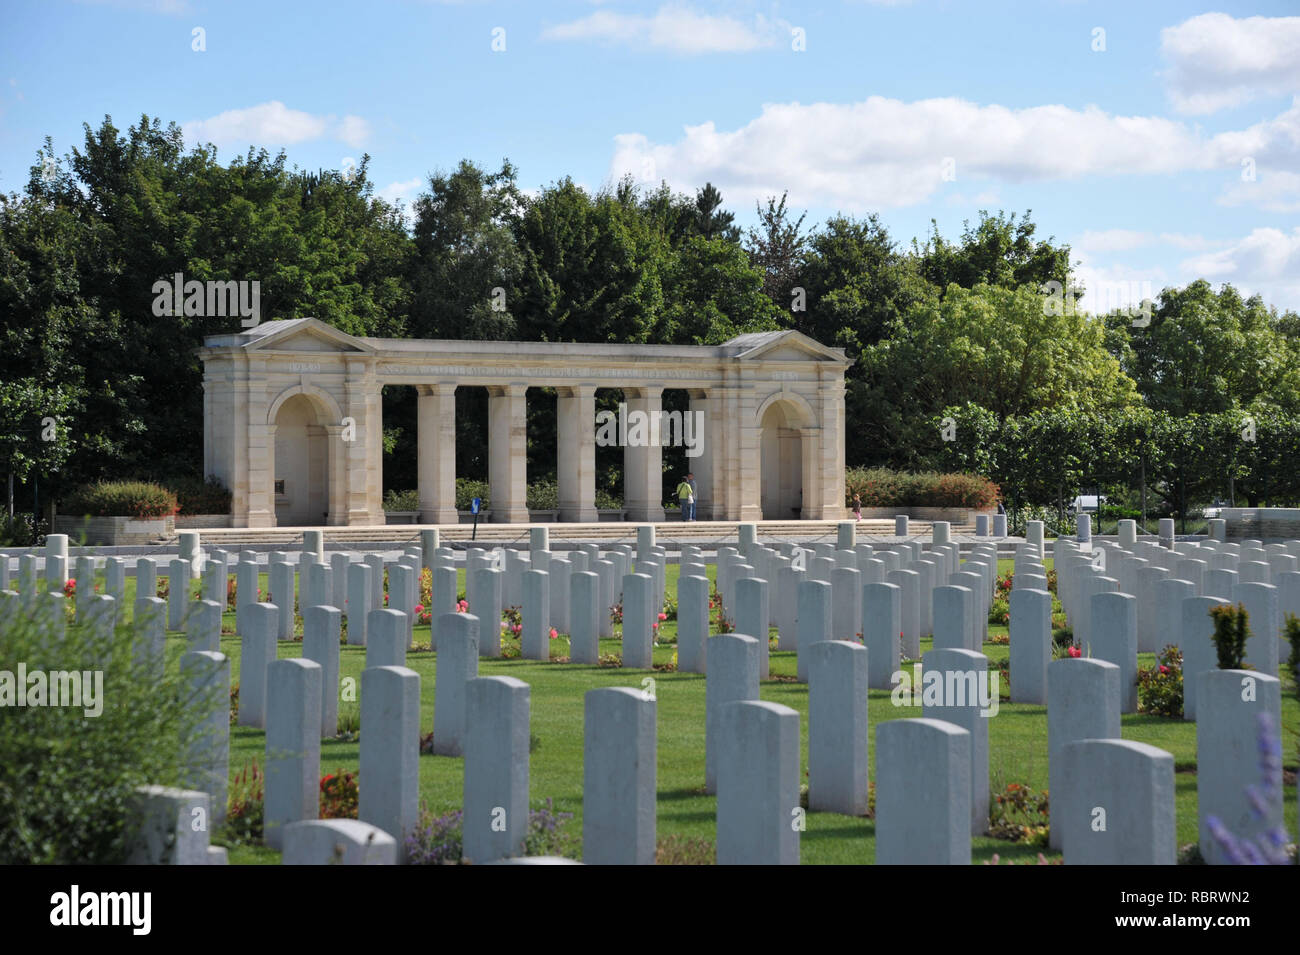 Bayeux Cimitero di Guerra, Bayeux, Normandia, Francia Foto Stock